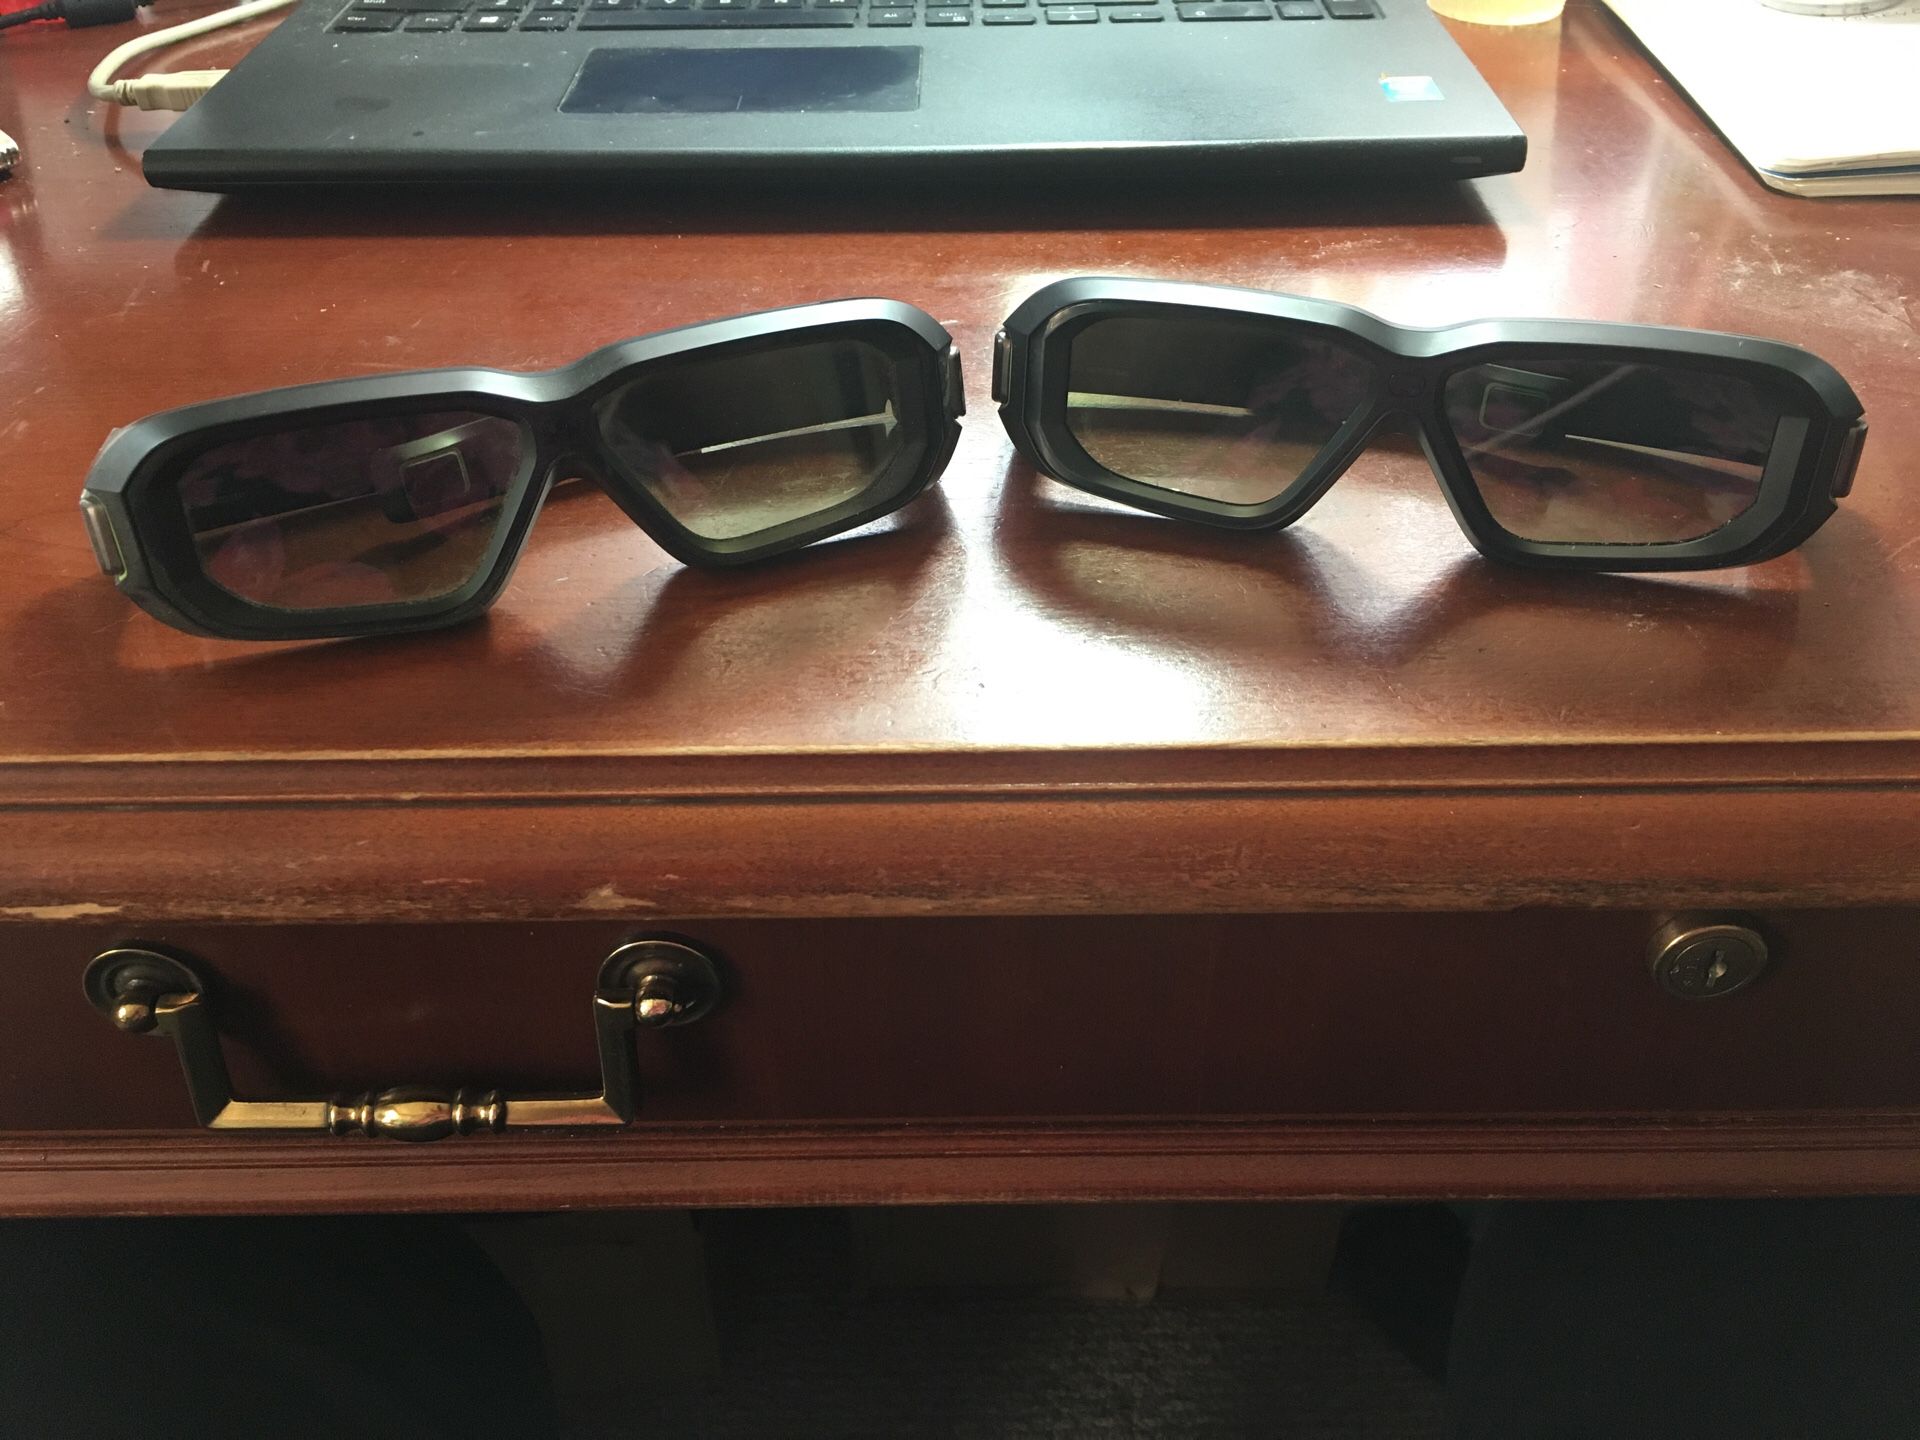 2 NVIDIDIA 3D Vision Wireless glasses